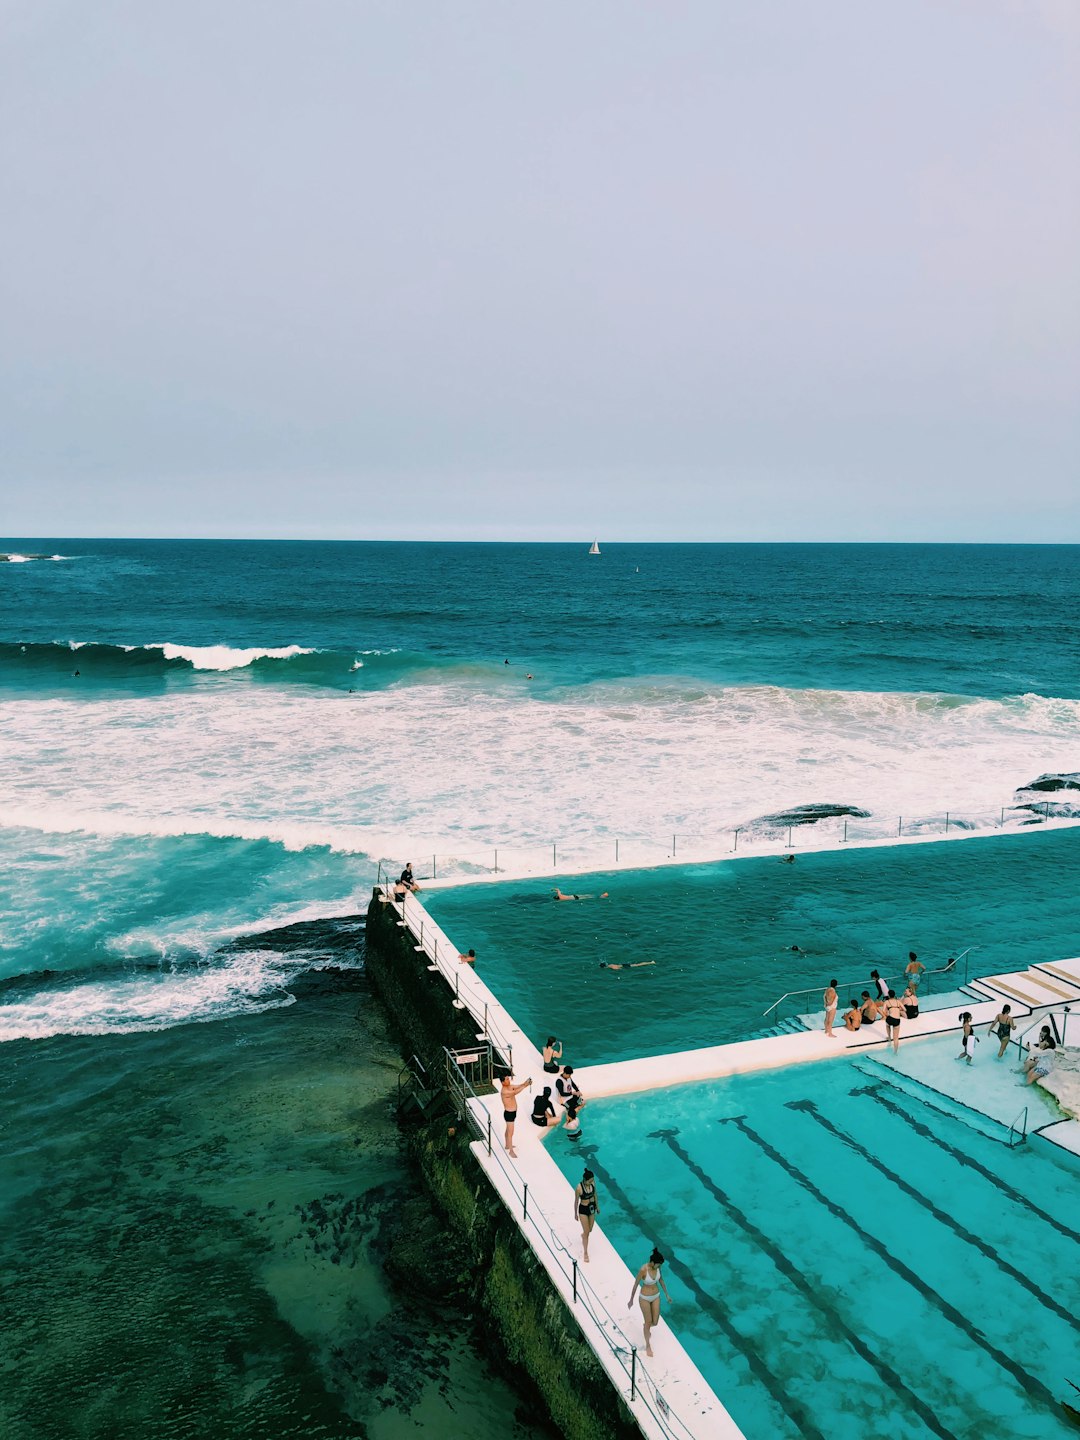 Travel Tips and Stories of Bondi Beach in Australia